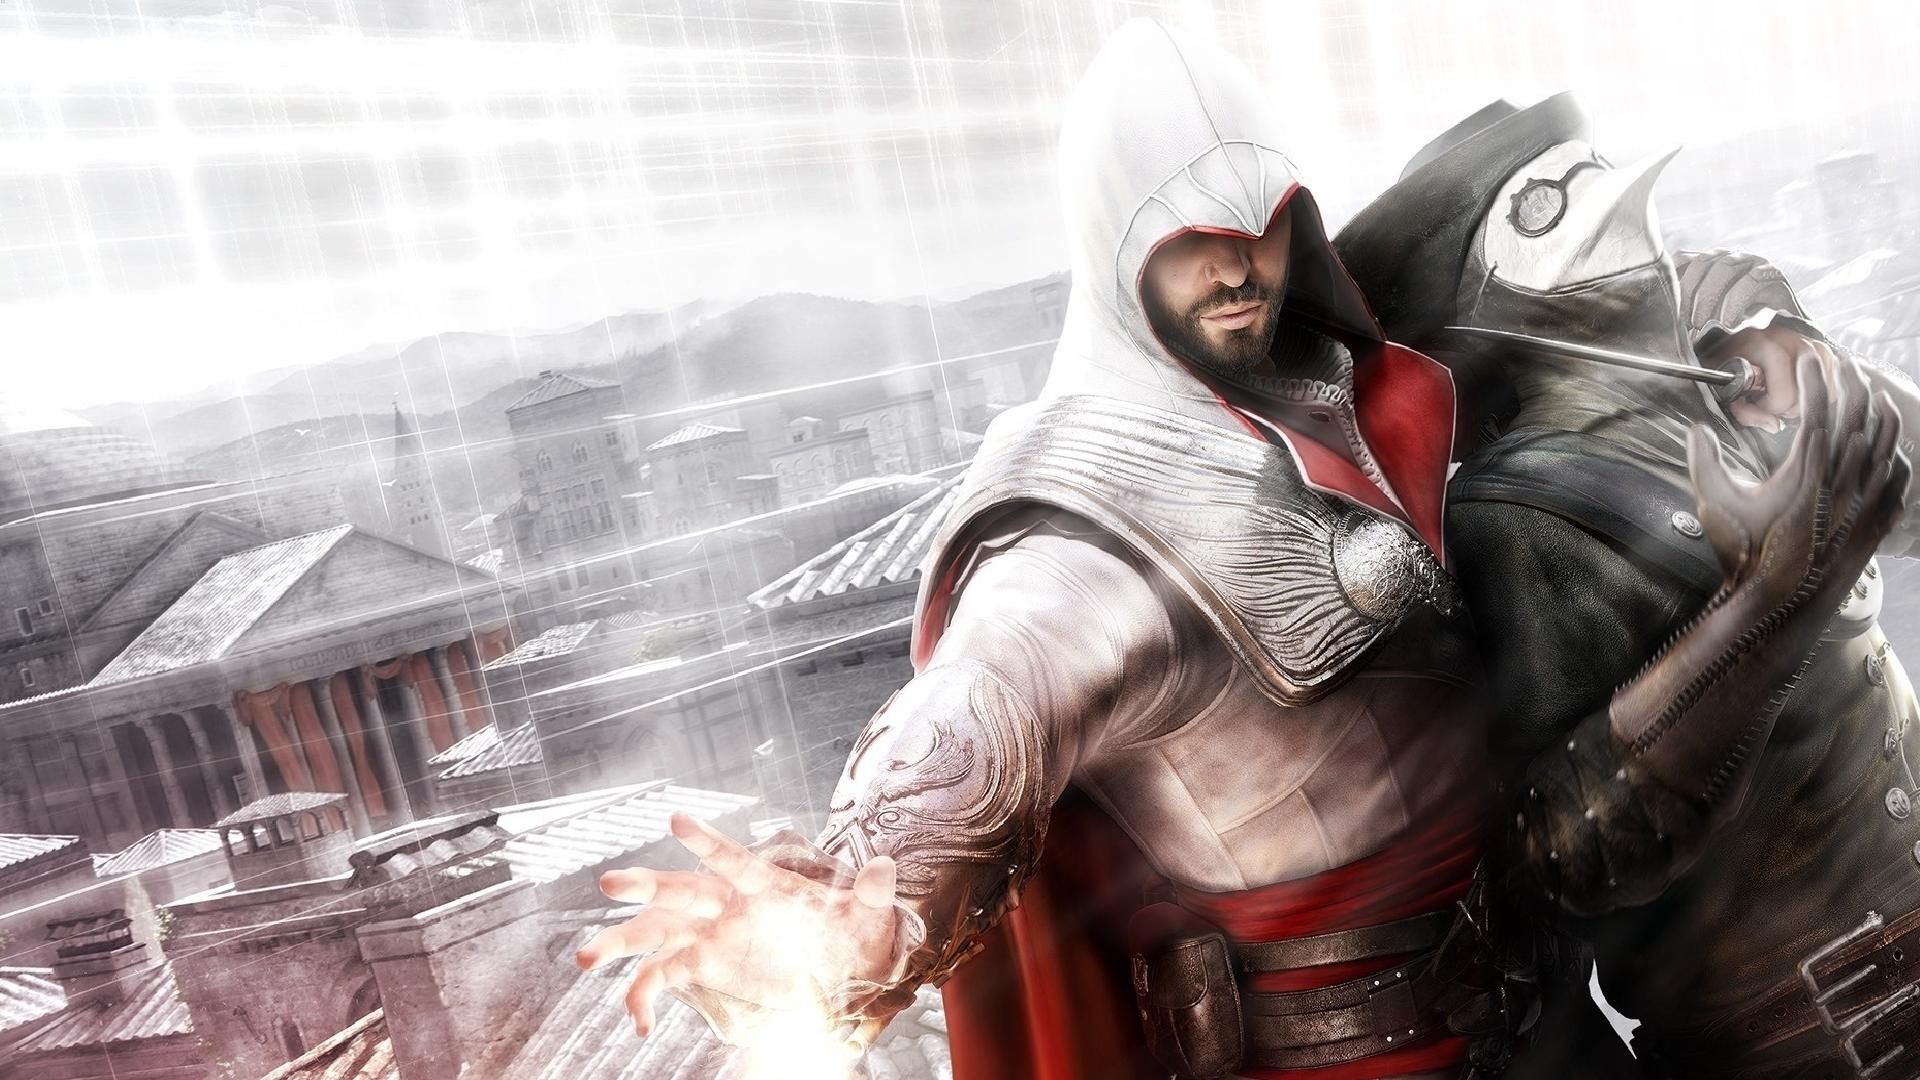 1920x1080 Assassin's Creed Brotherhood Wallpaper HD - WallpaperSafari